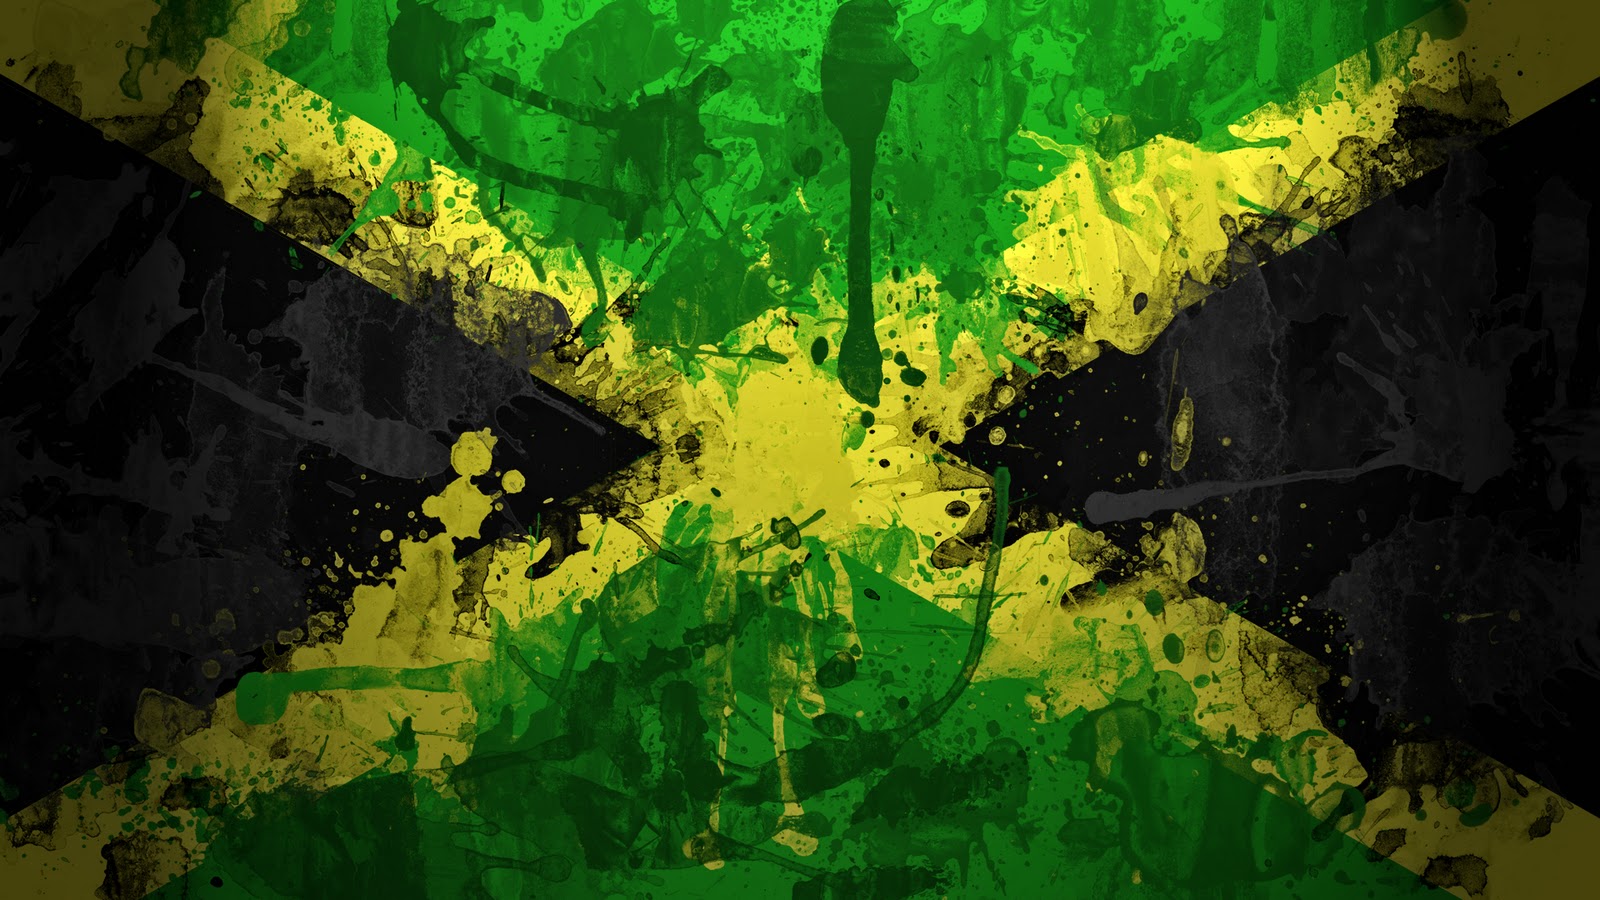 Wallpaper Flag Of Jamaica Jancok